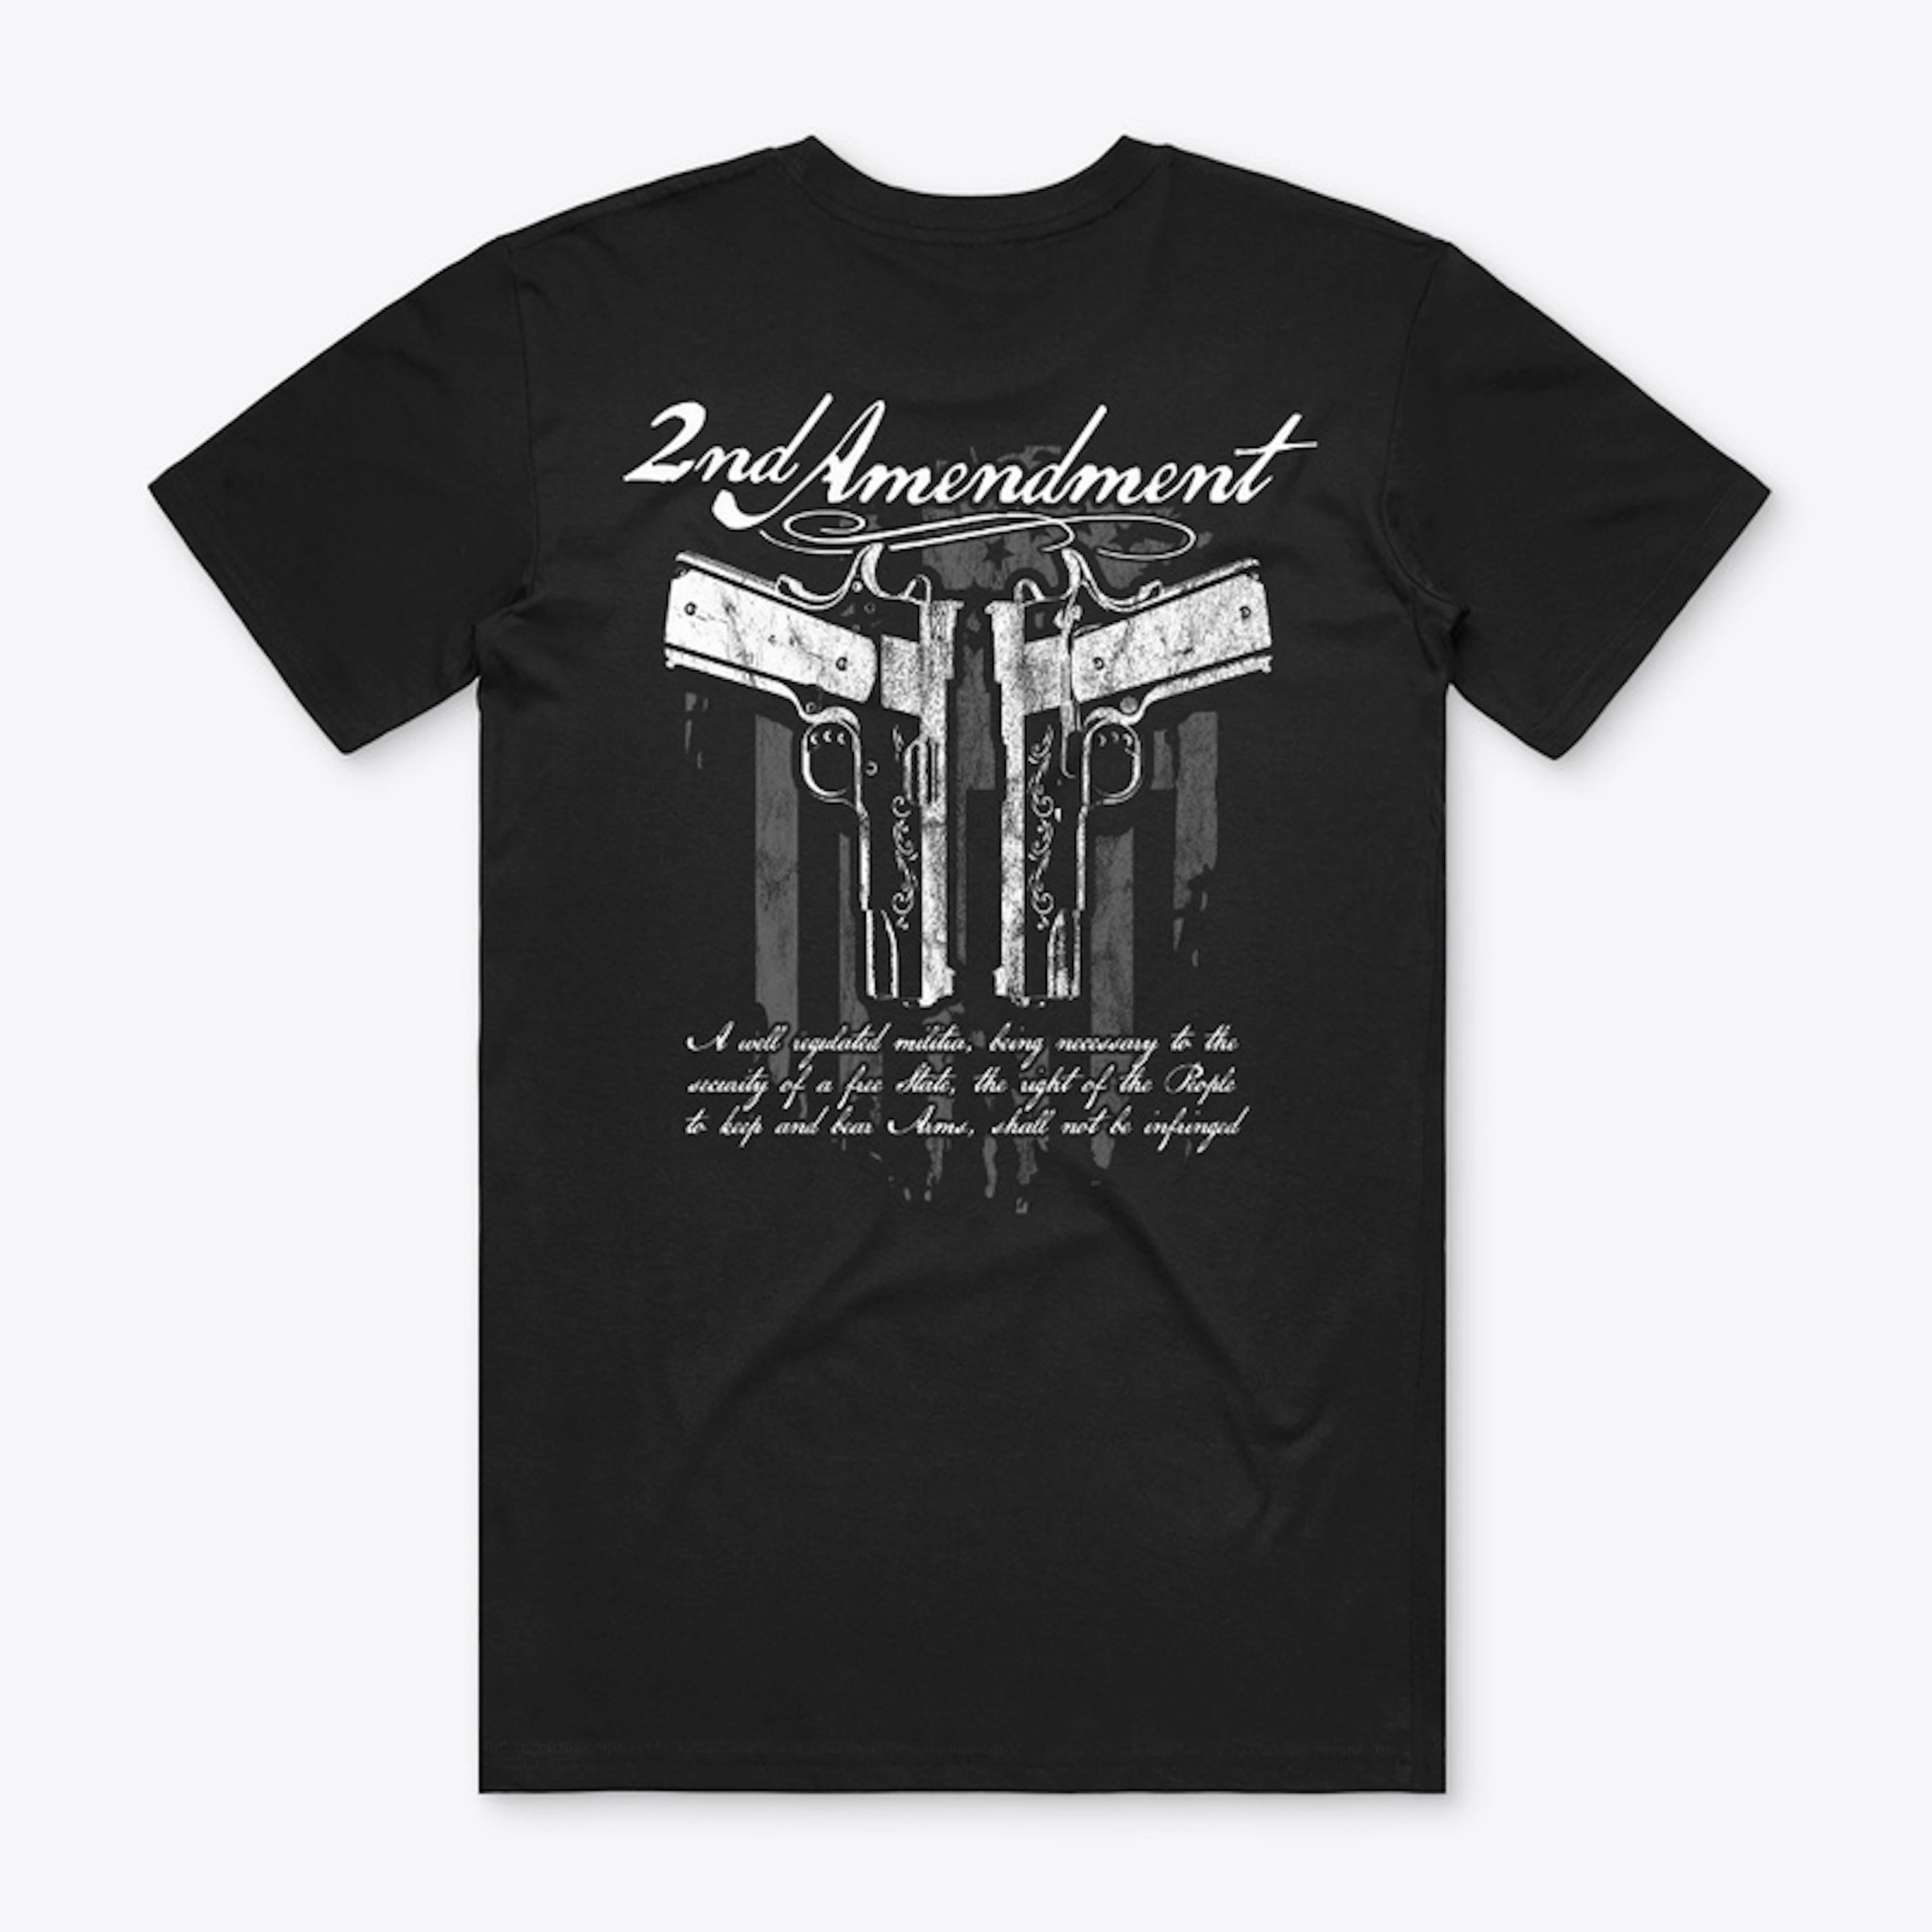 2nd Amendment 1911 Pro-Gun